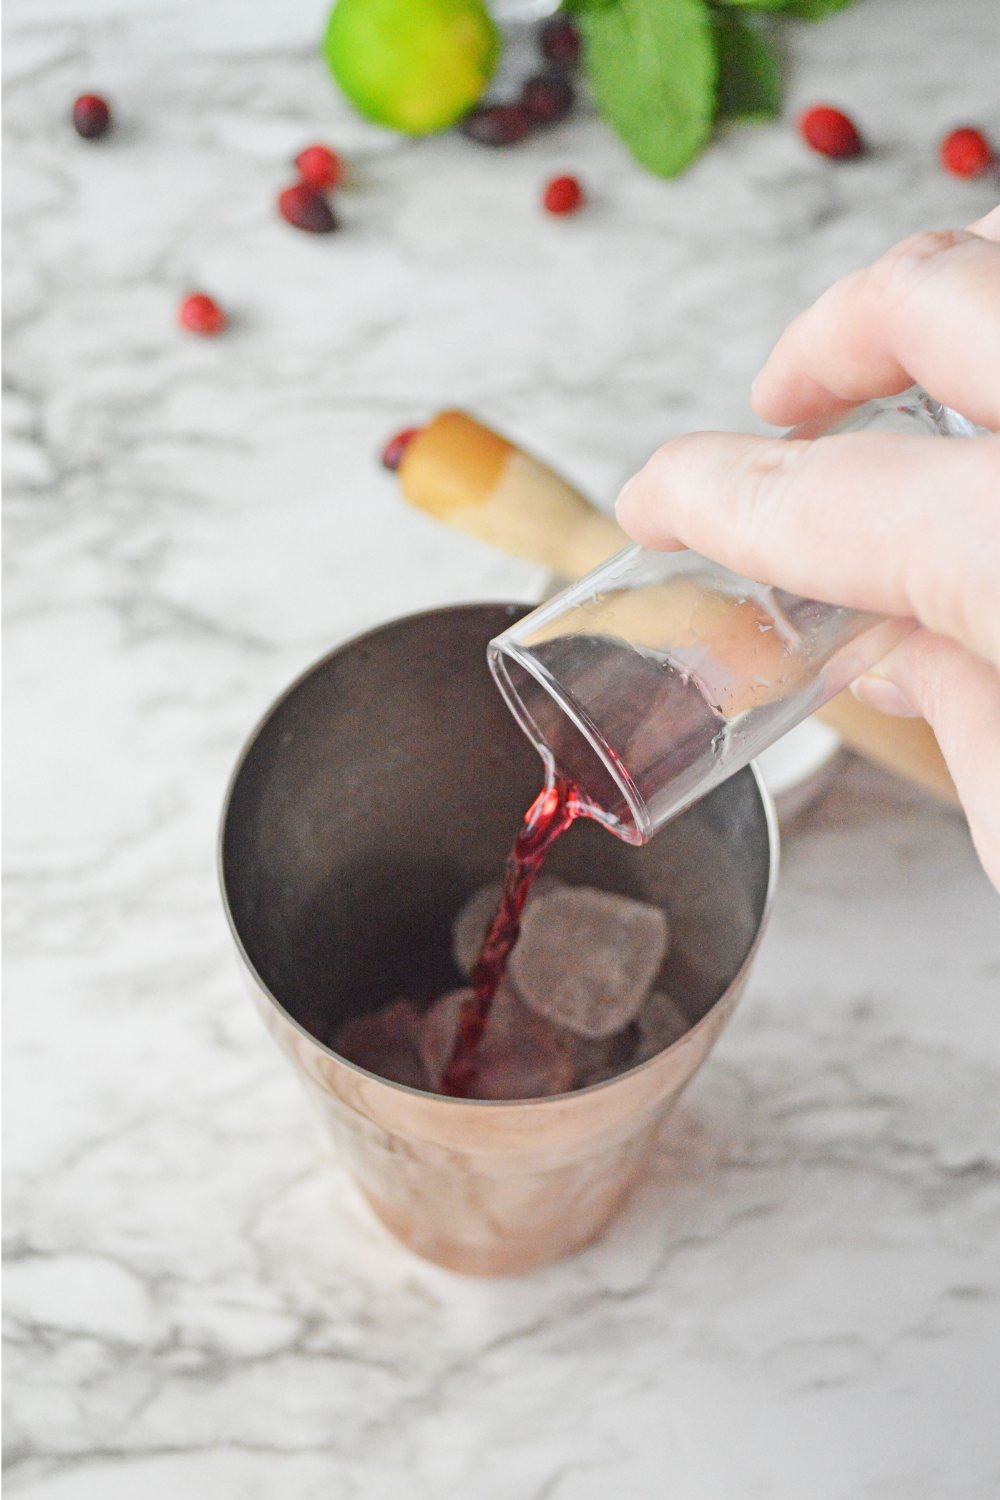 Add cranberry mojito to shaker along with rum to make a cranberry mojito recipe.